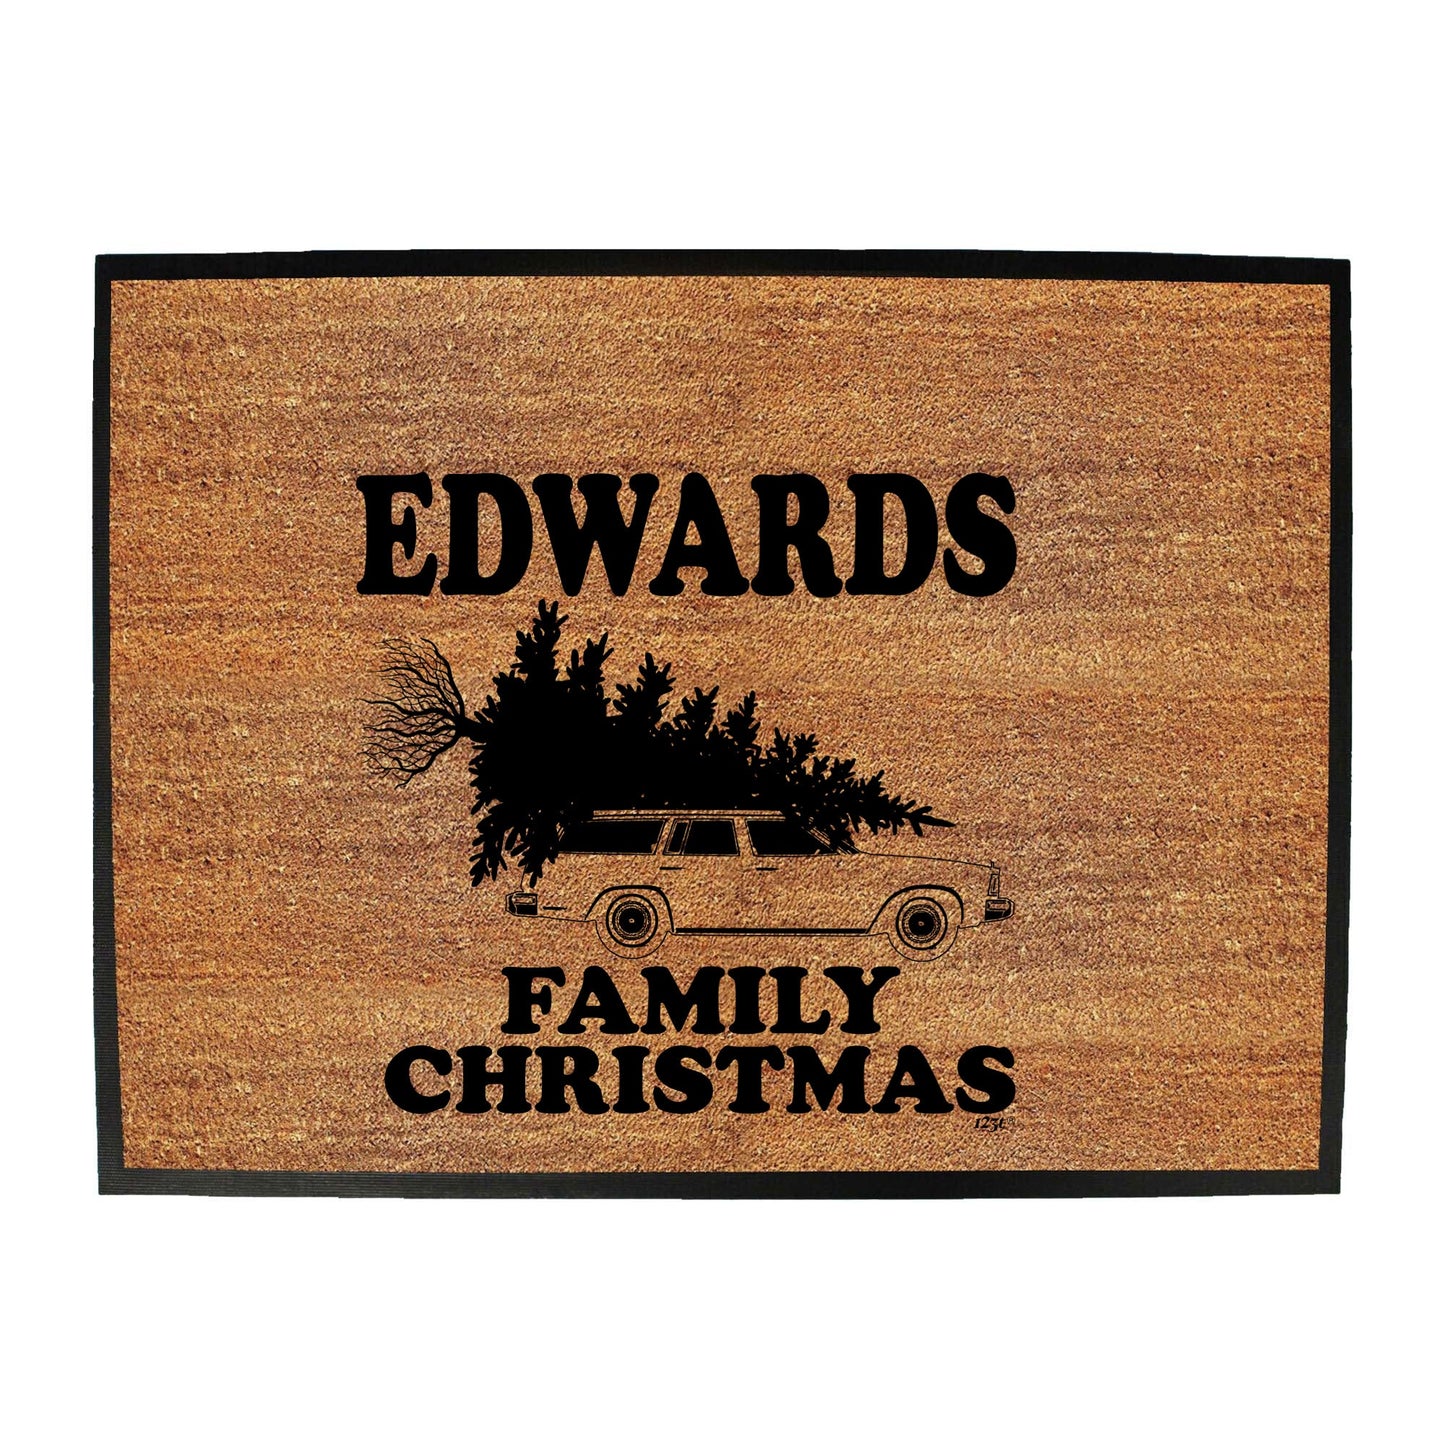 Family Christmas Edwards - Funny Novelty Doormat